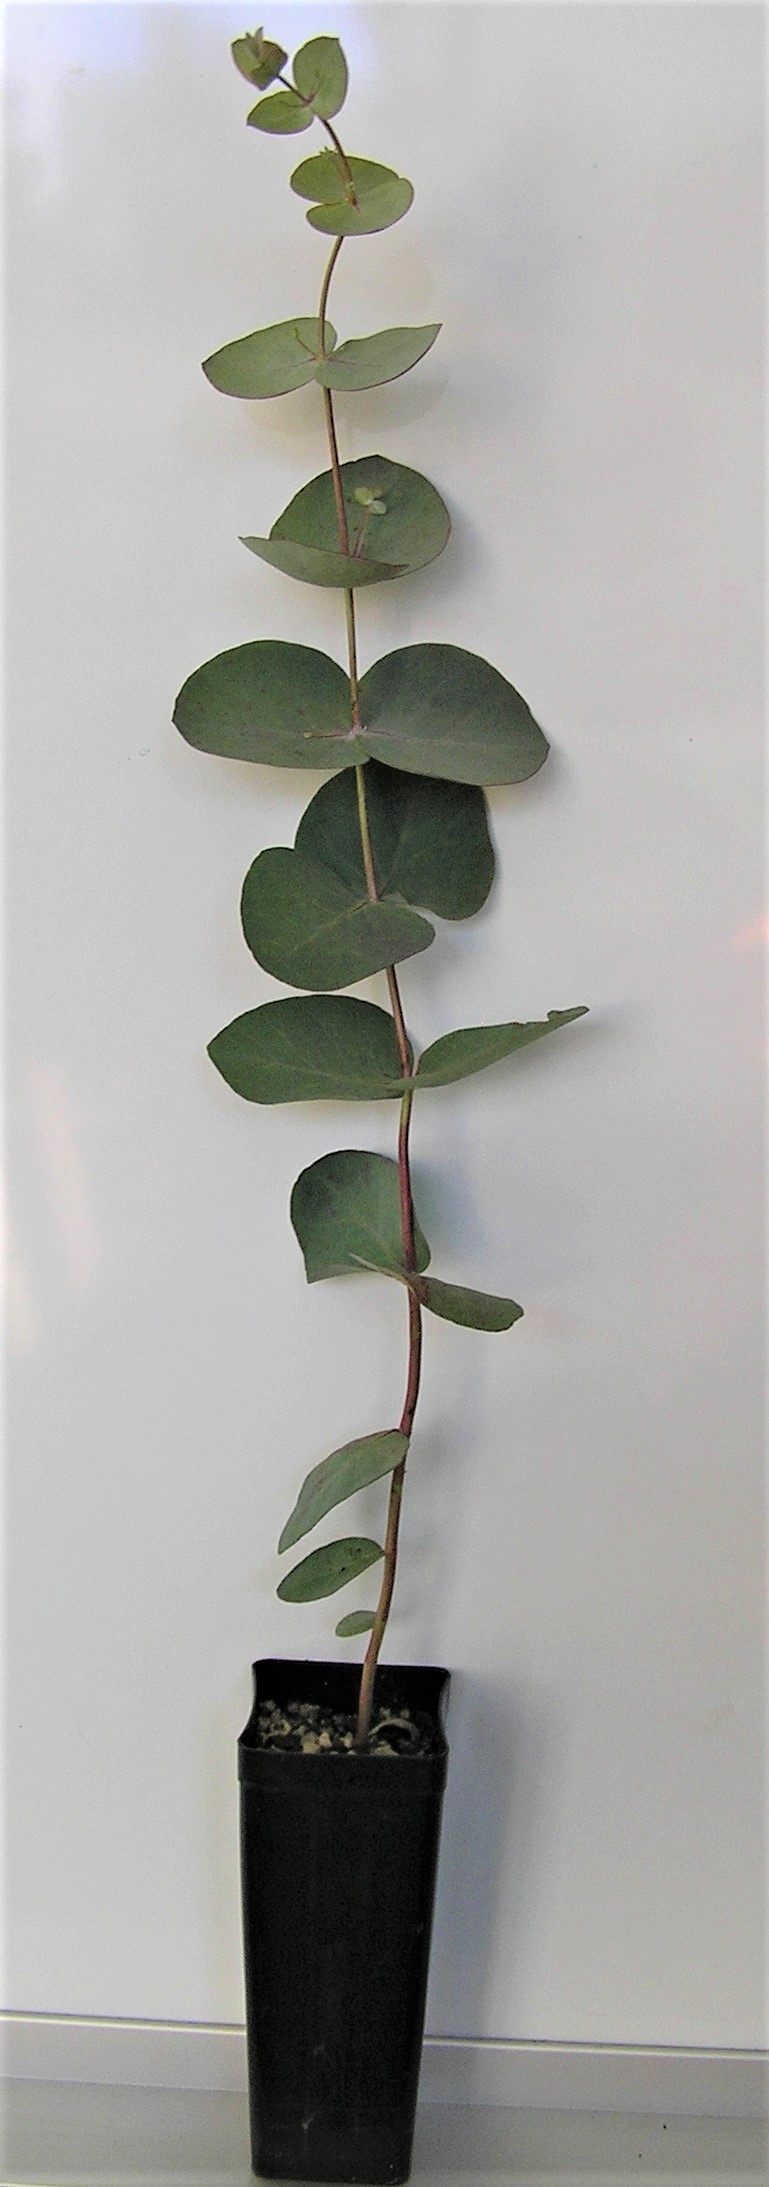 Eucalyptus Rubida (Candlebark) at 4 months